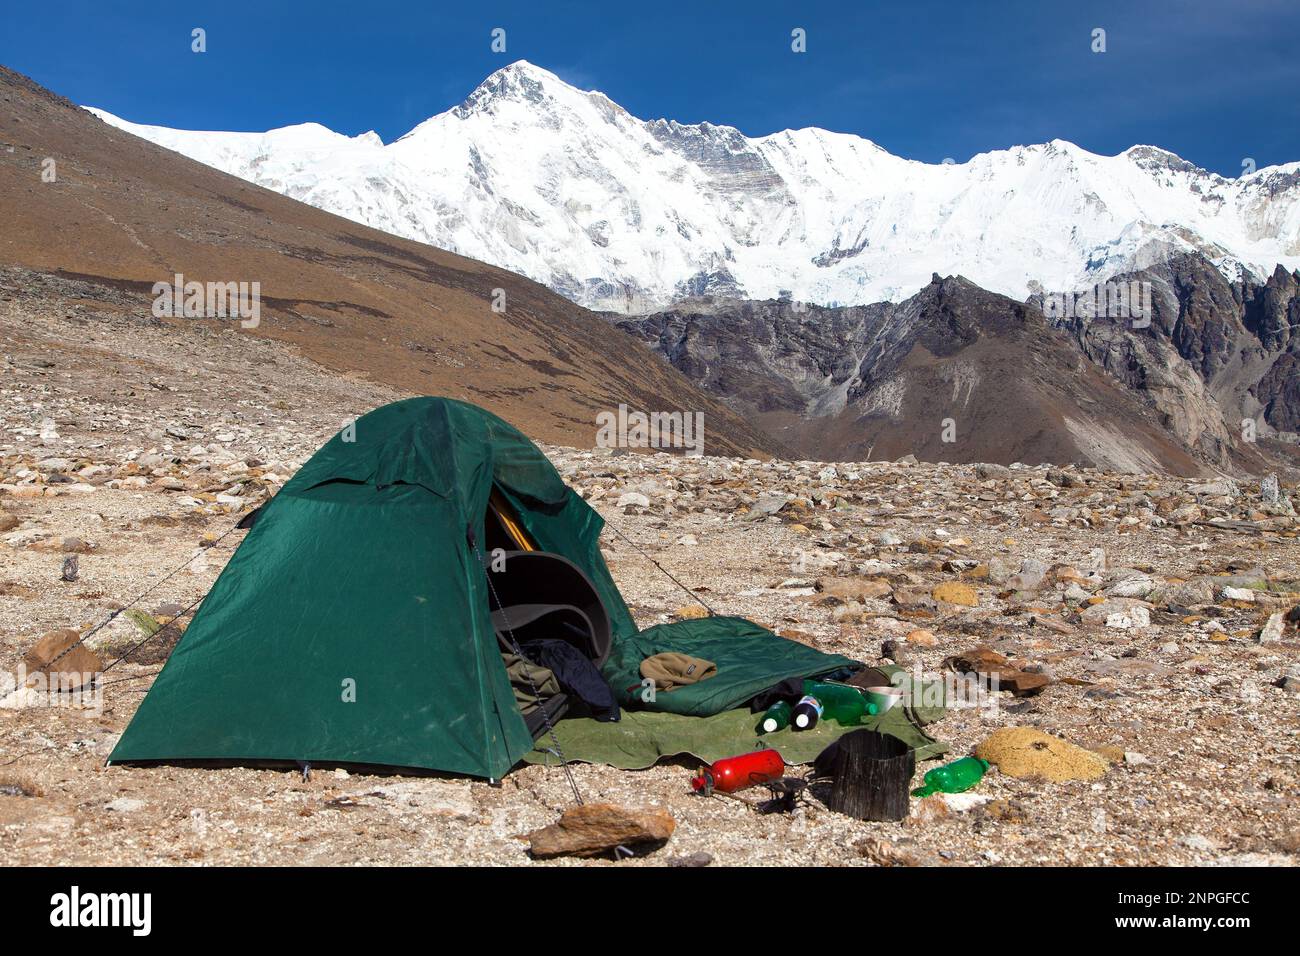 Camping unter dem Berg Cho oyu, Cho oyu Basislager, nepal himalaya Berge Stockfoto